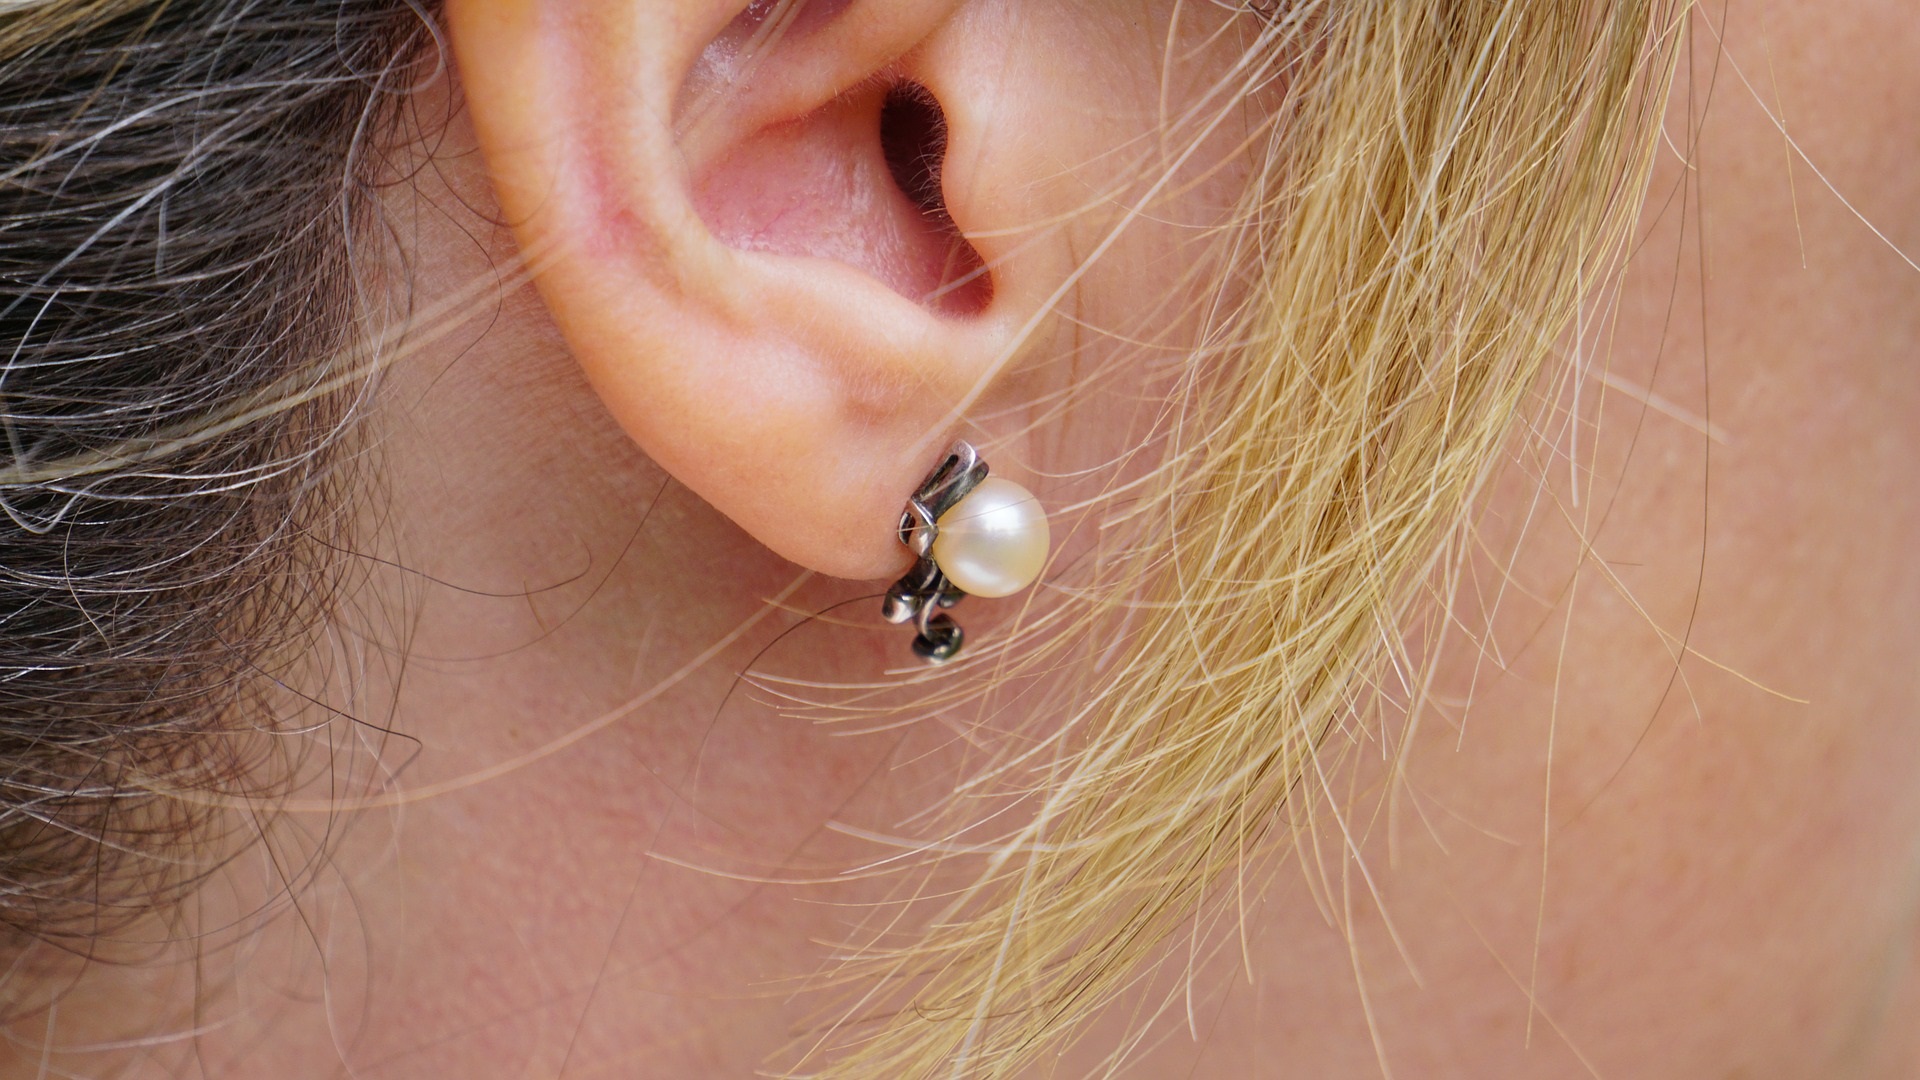 How to repair damaged ear piercings - The Washington Post